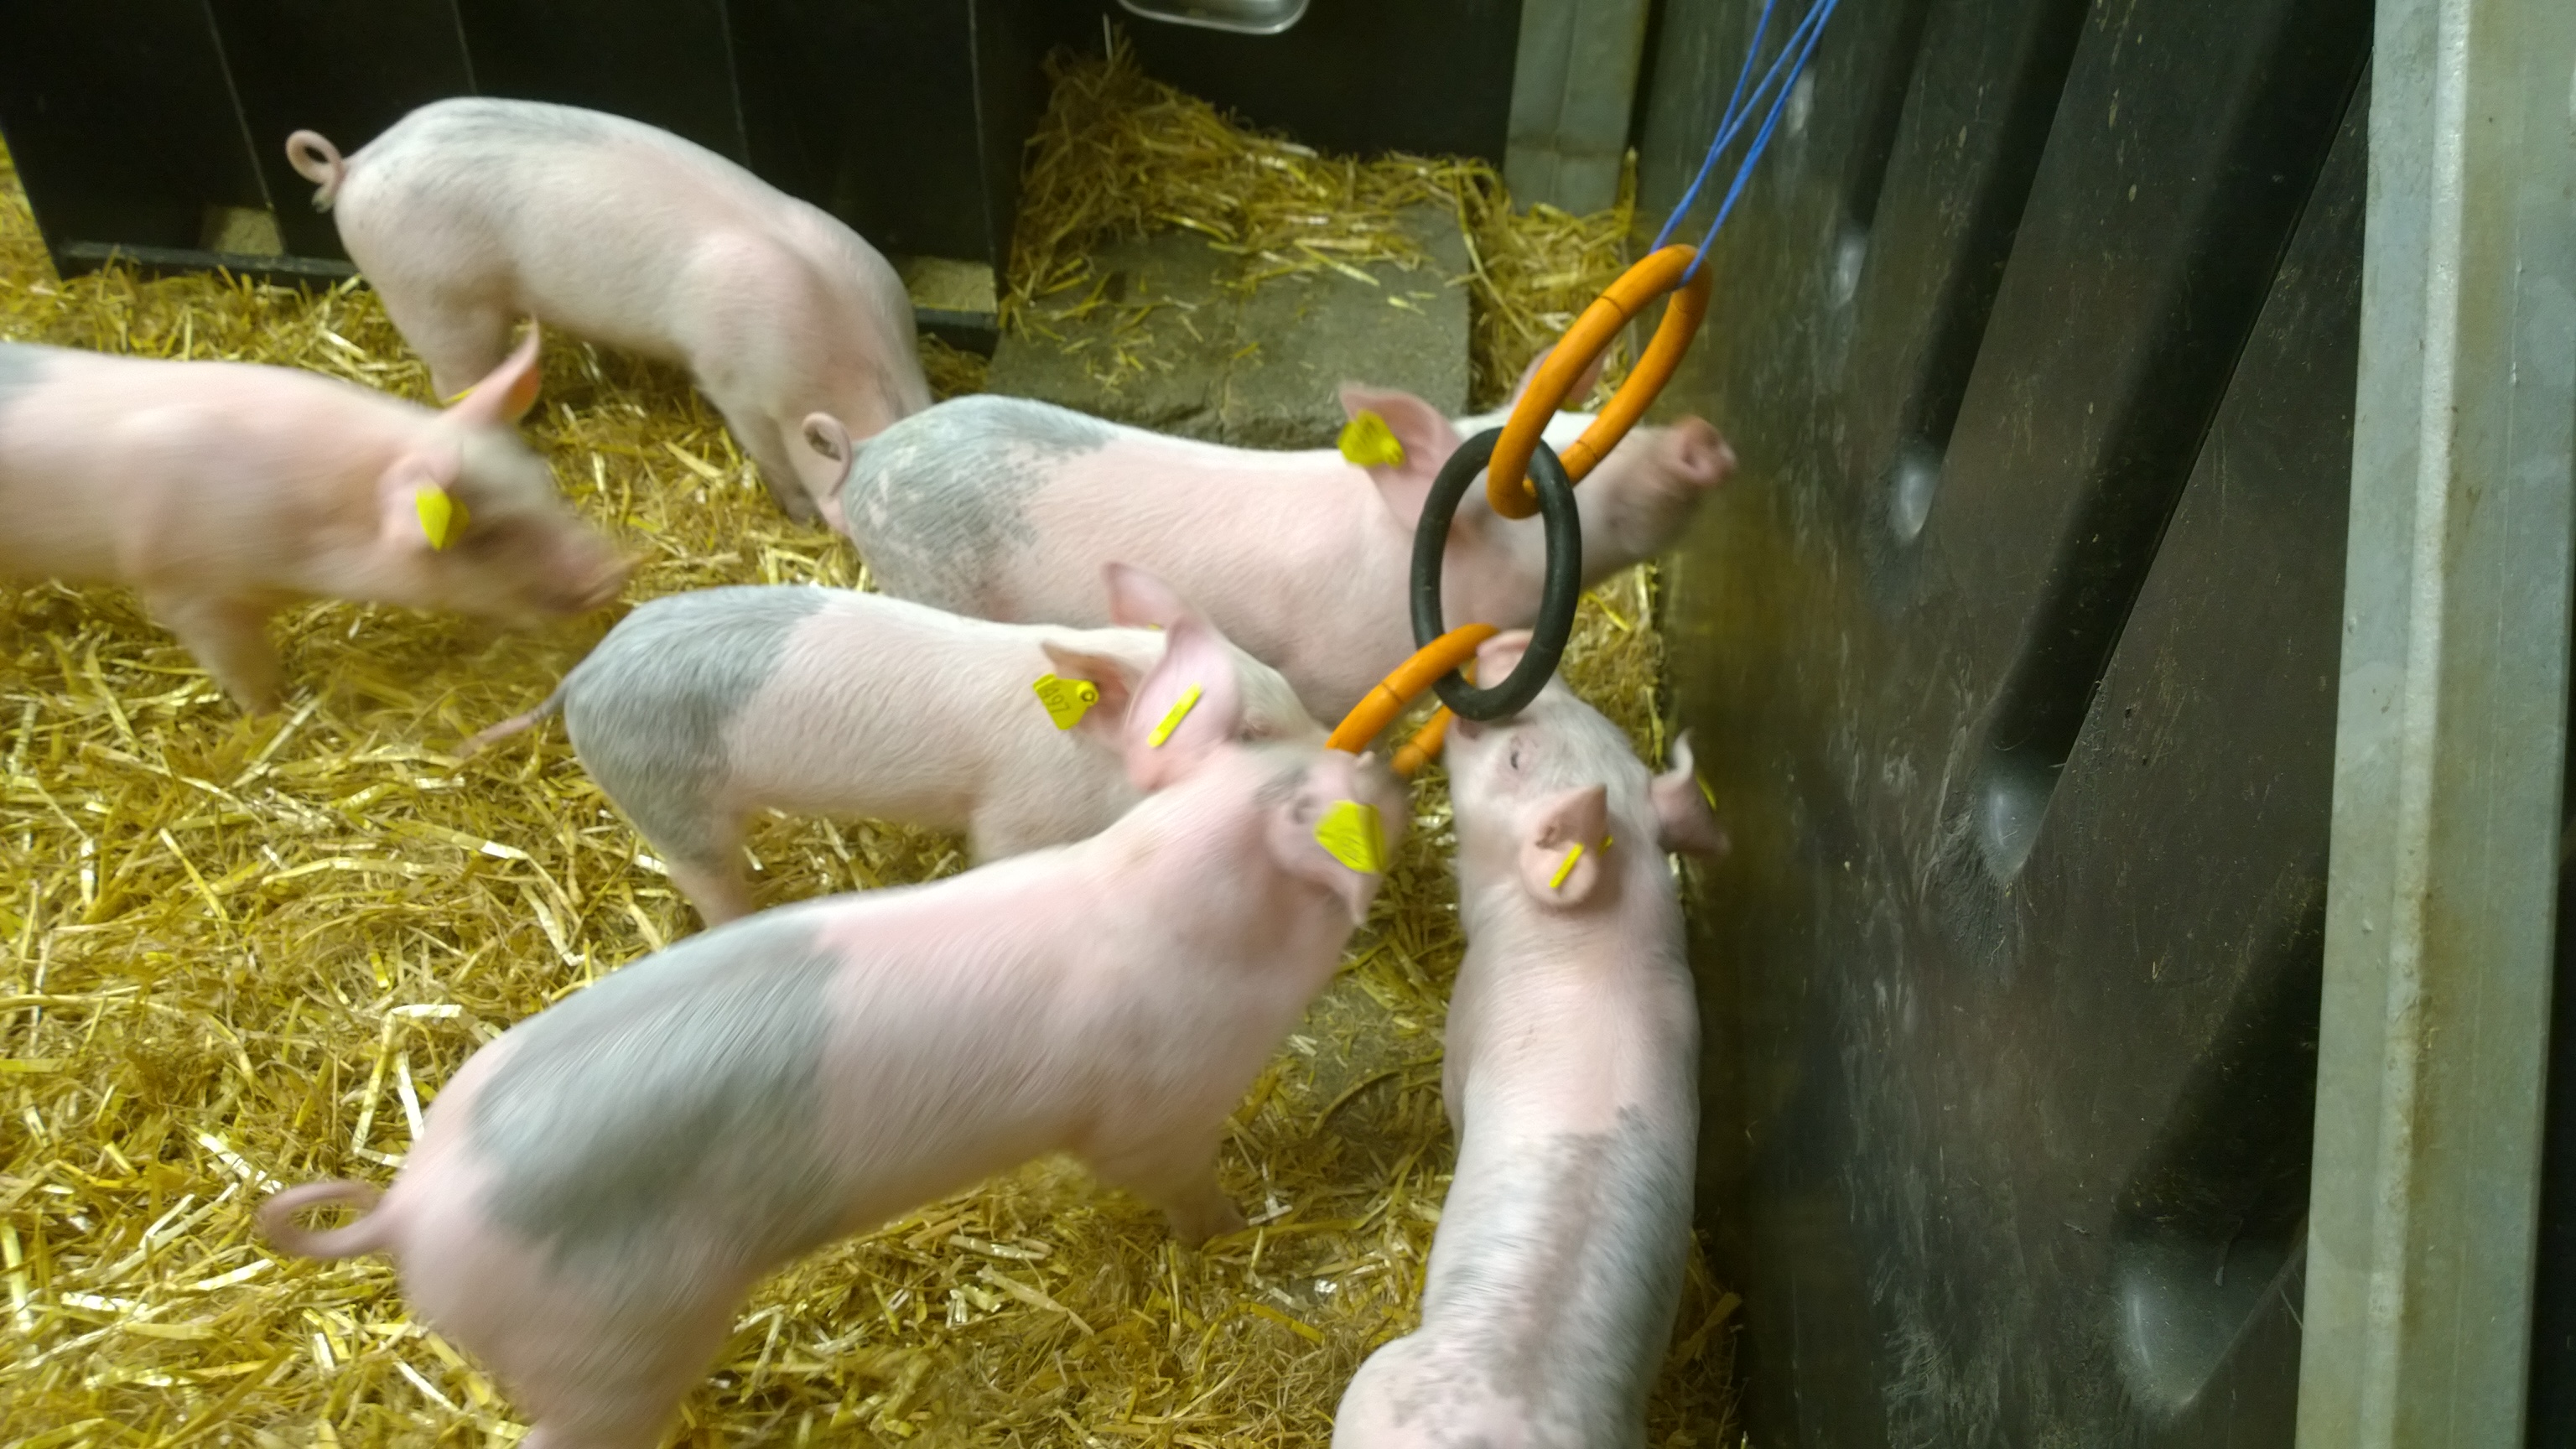 Enrichment for pigs